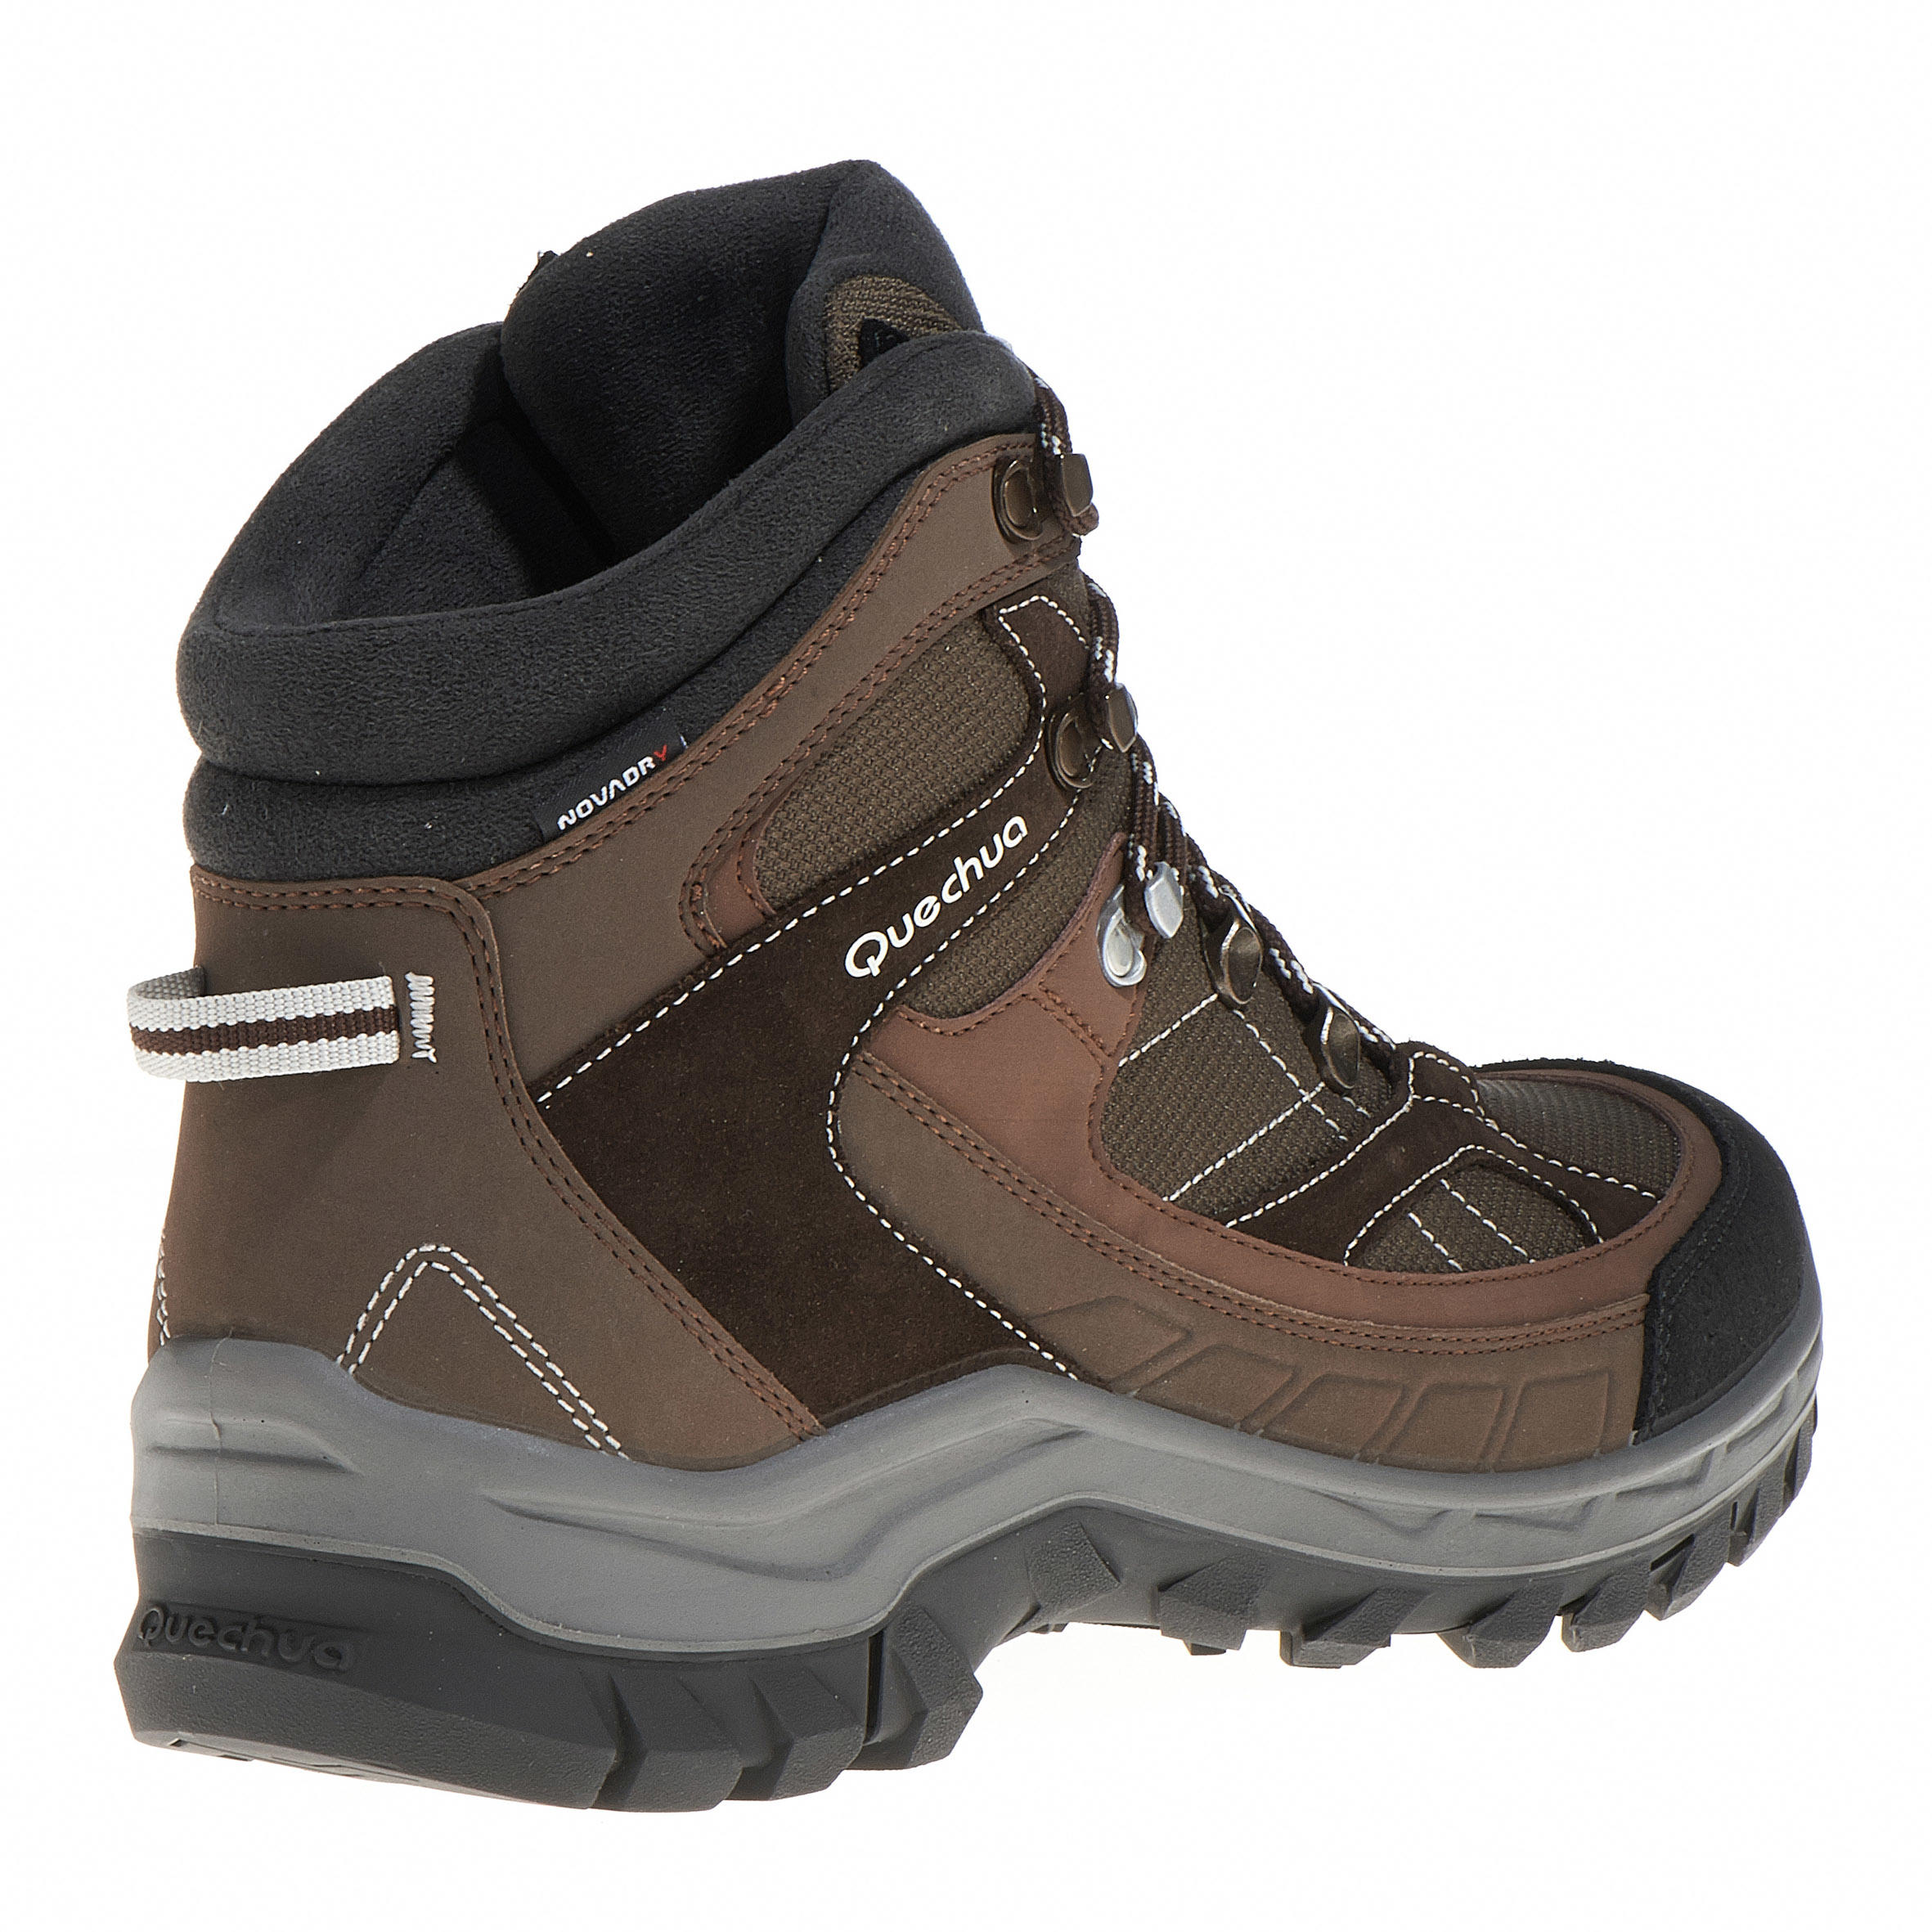 Quechua Forclaz 100 Men's High Waterproof Hiking Shoes 7/13